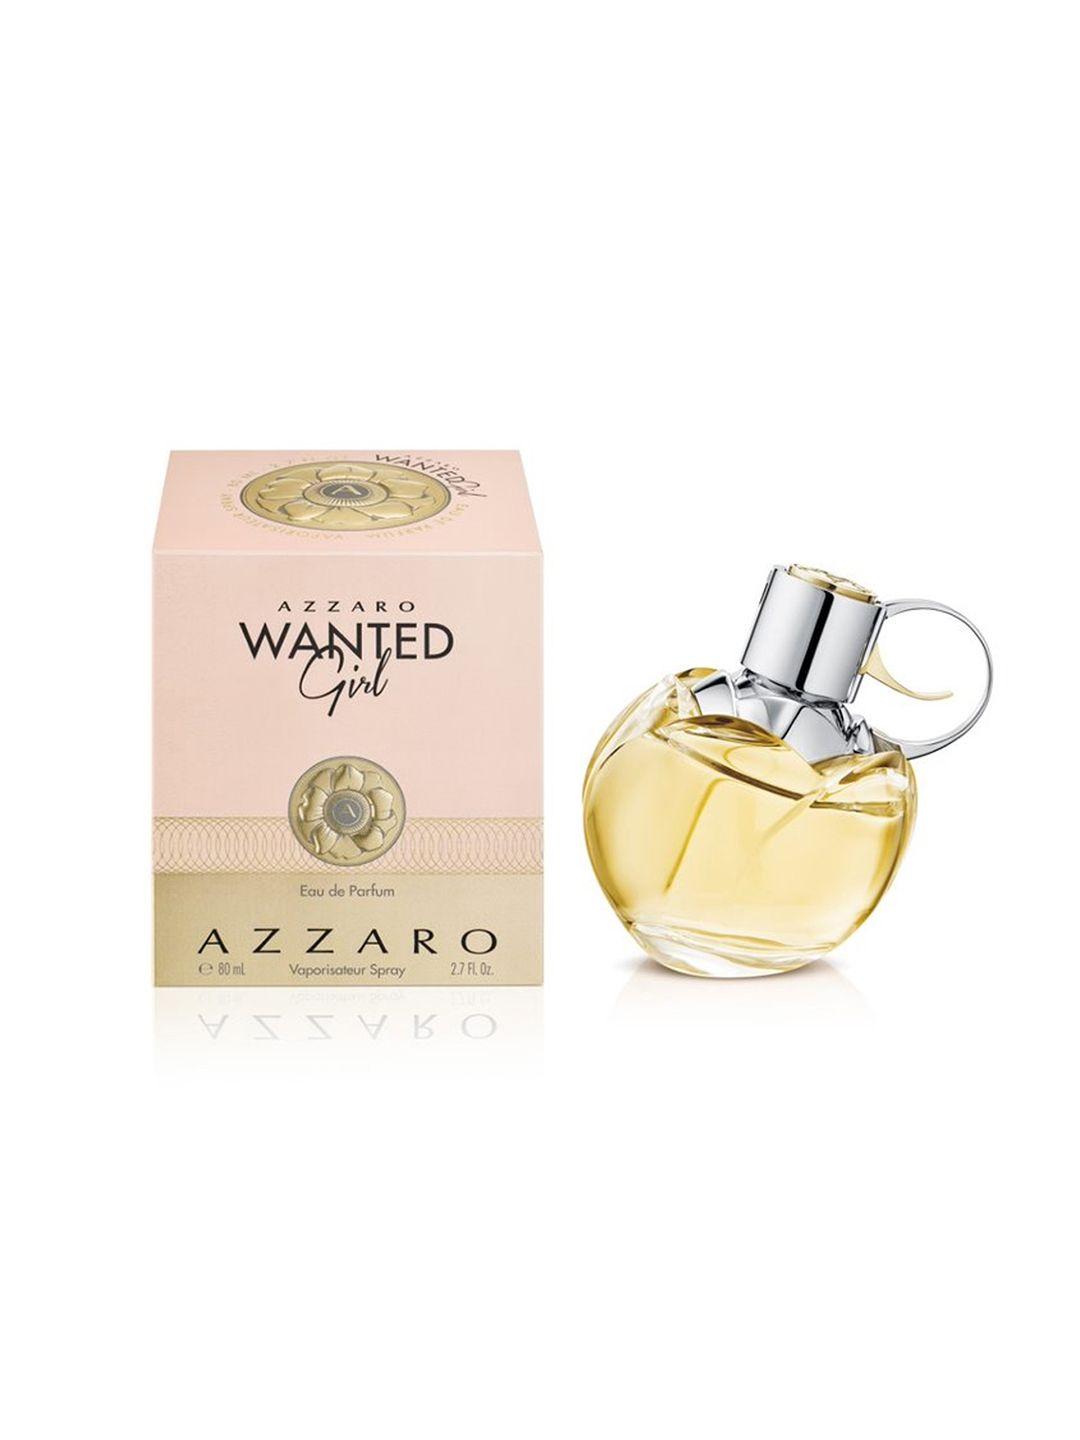 azzaro women wanted girl eau de parfum spray - 80ml